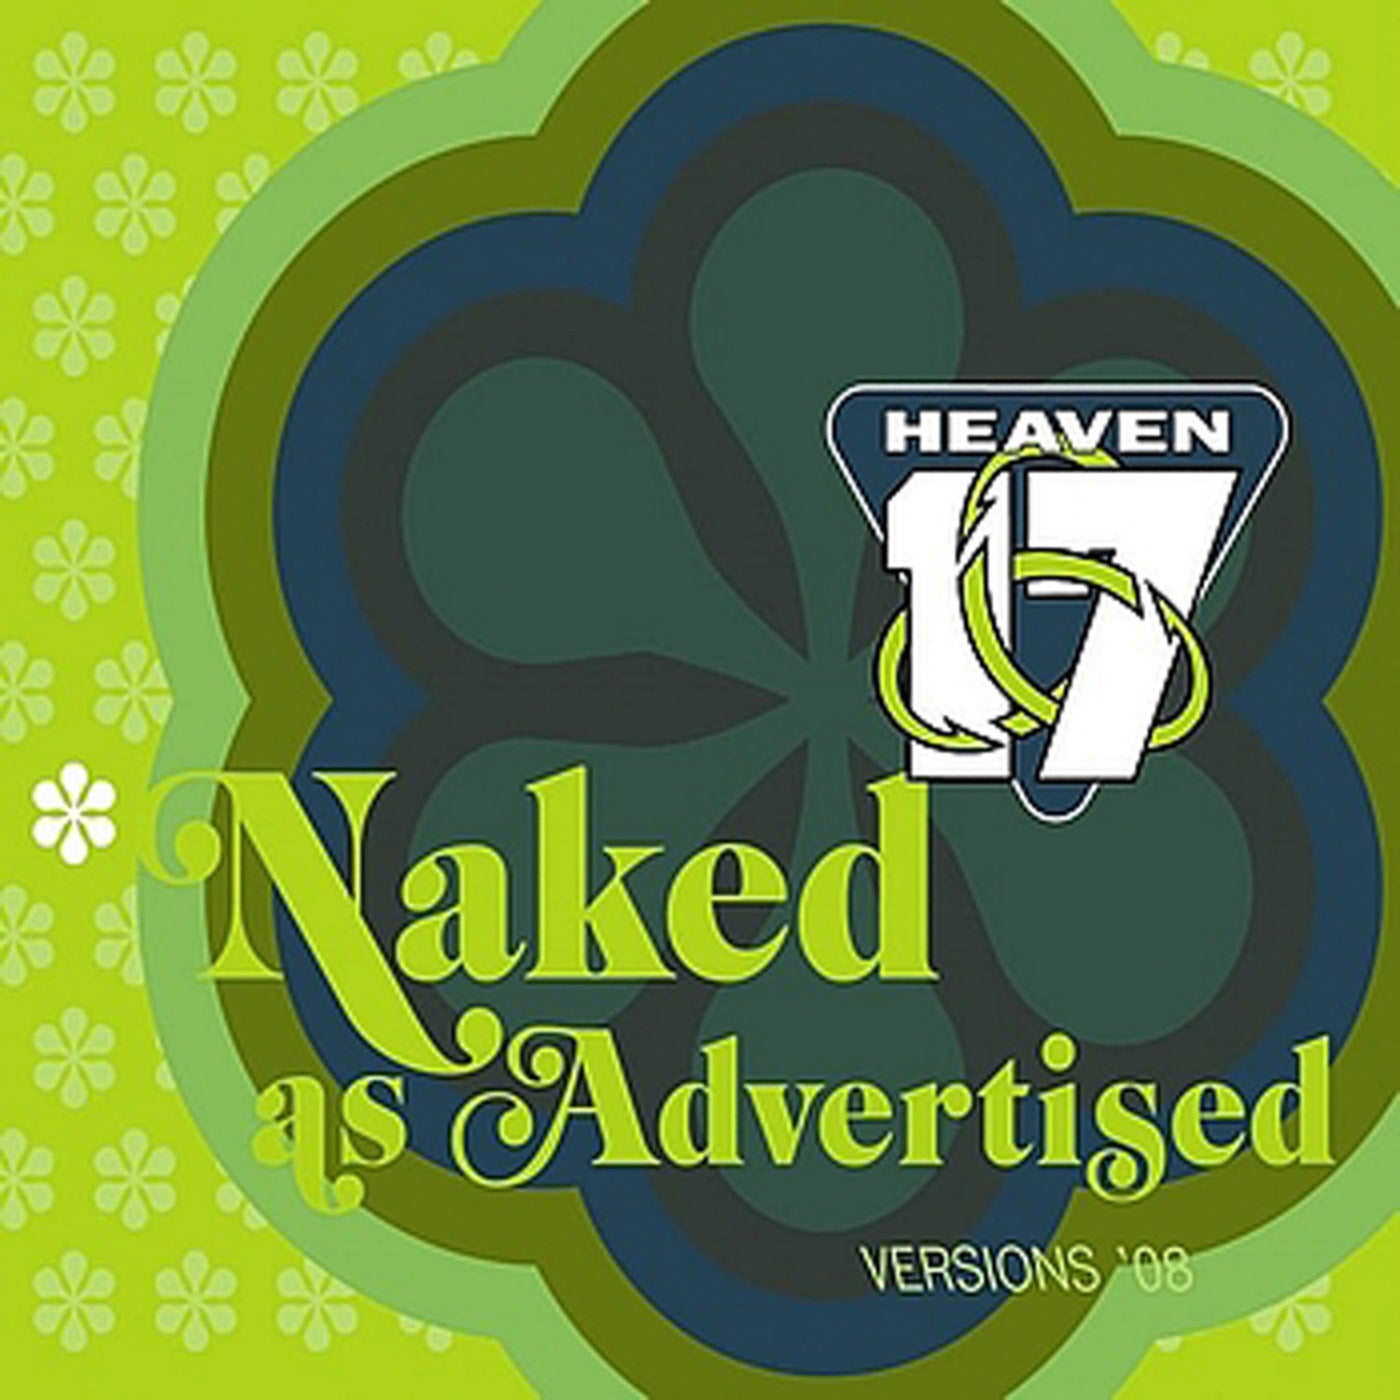 * Naked as Advertised - Versions 08